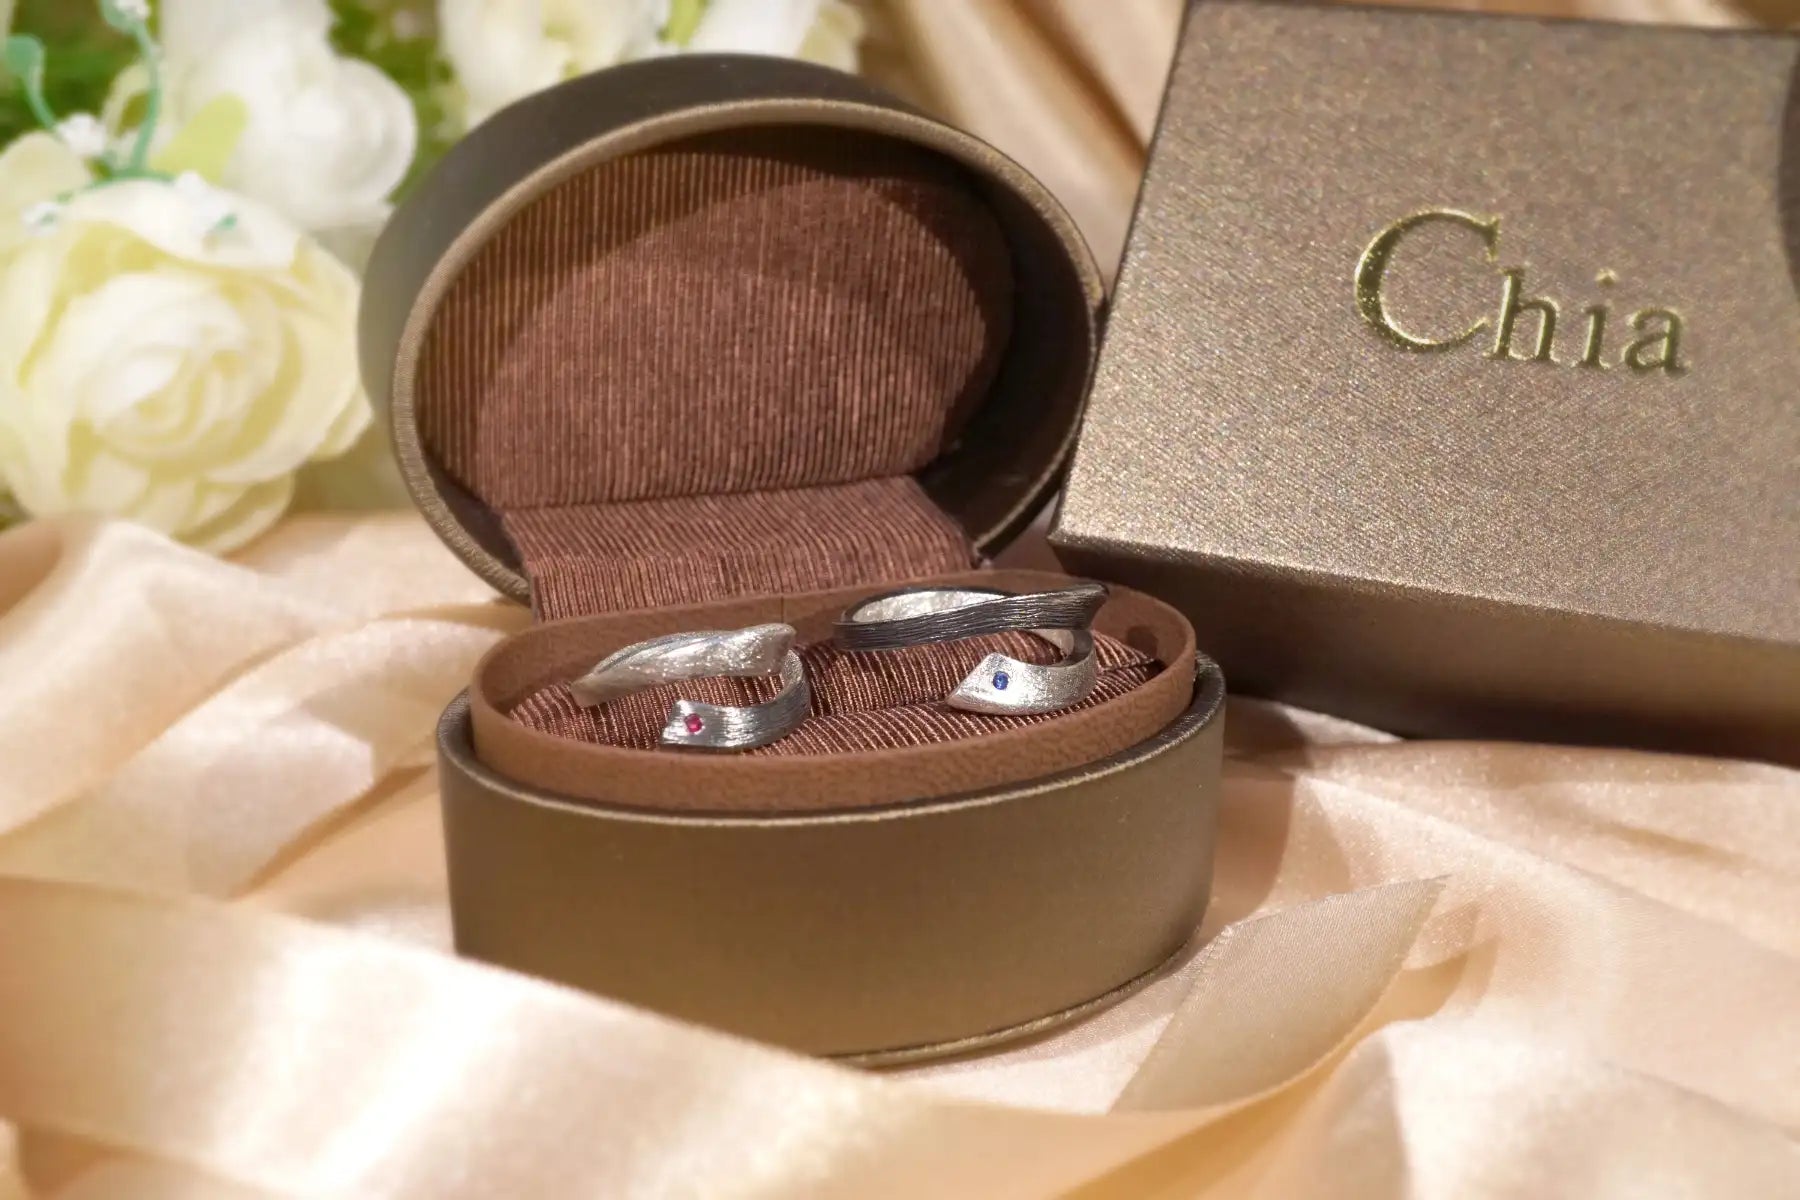 Chia Jewelry婚戒對戒客製化品牌推薦分享，鑲紅寶藍寶，黑白雙色獨特設計簡約款式